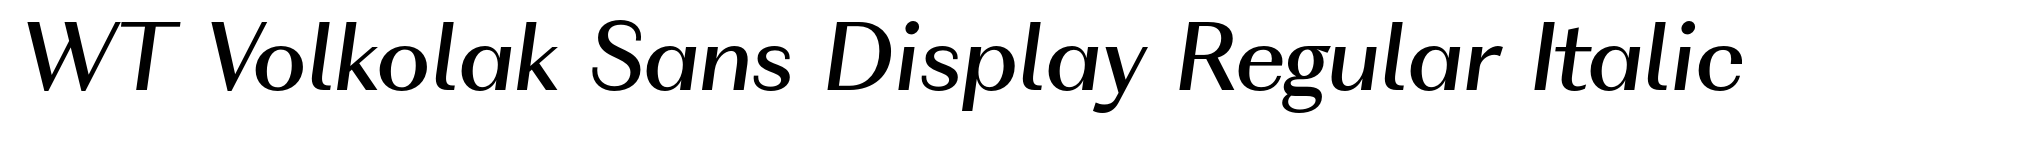 WT Volkolak Sans Display Regular Italic image